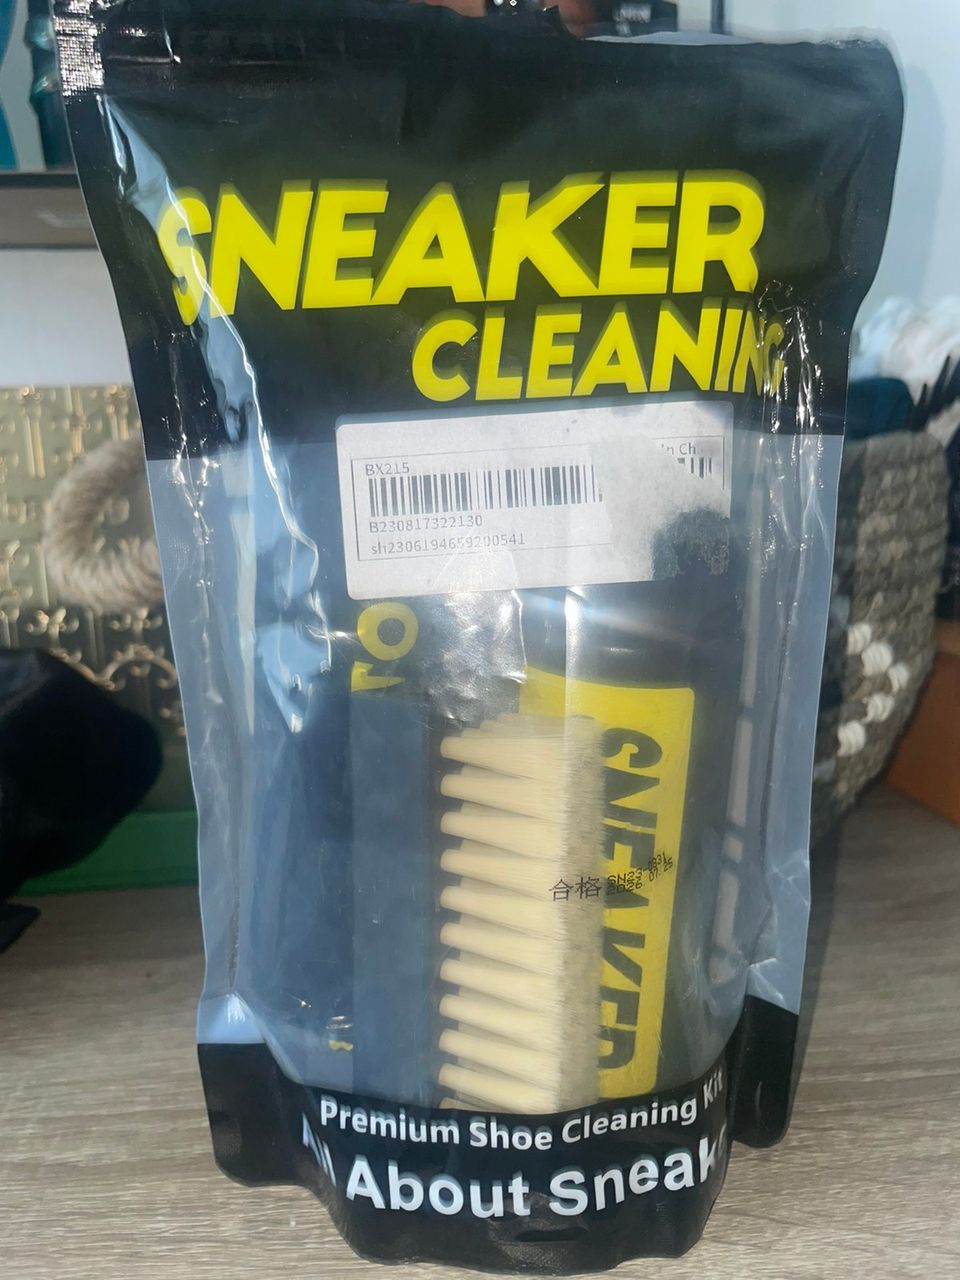 Sneaker Cleaning kit